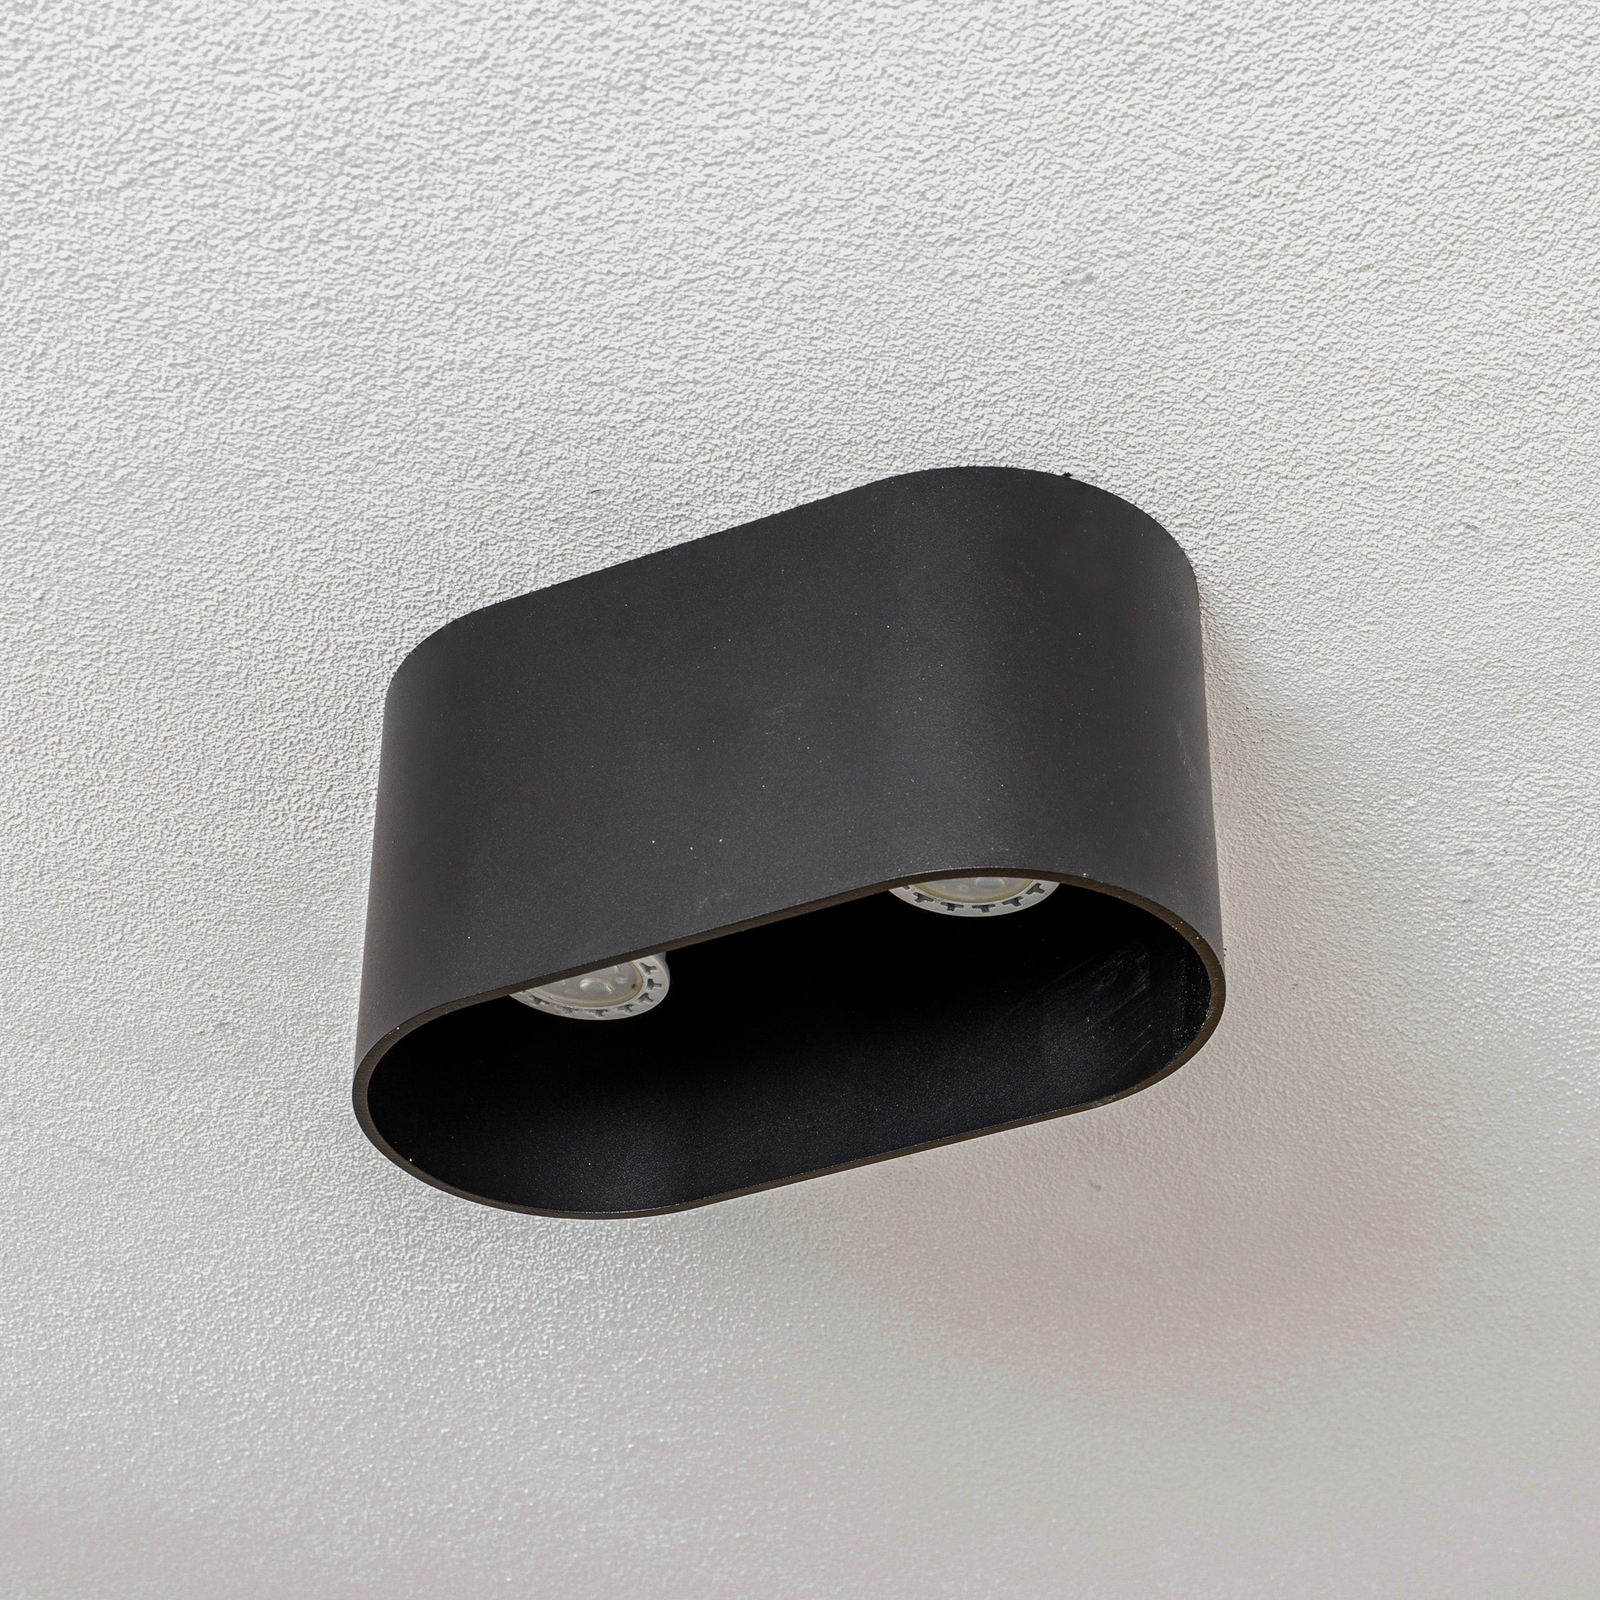 Downlight Oval, 2 lyskilder, svart